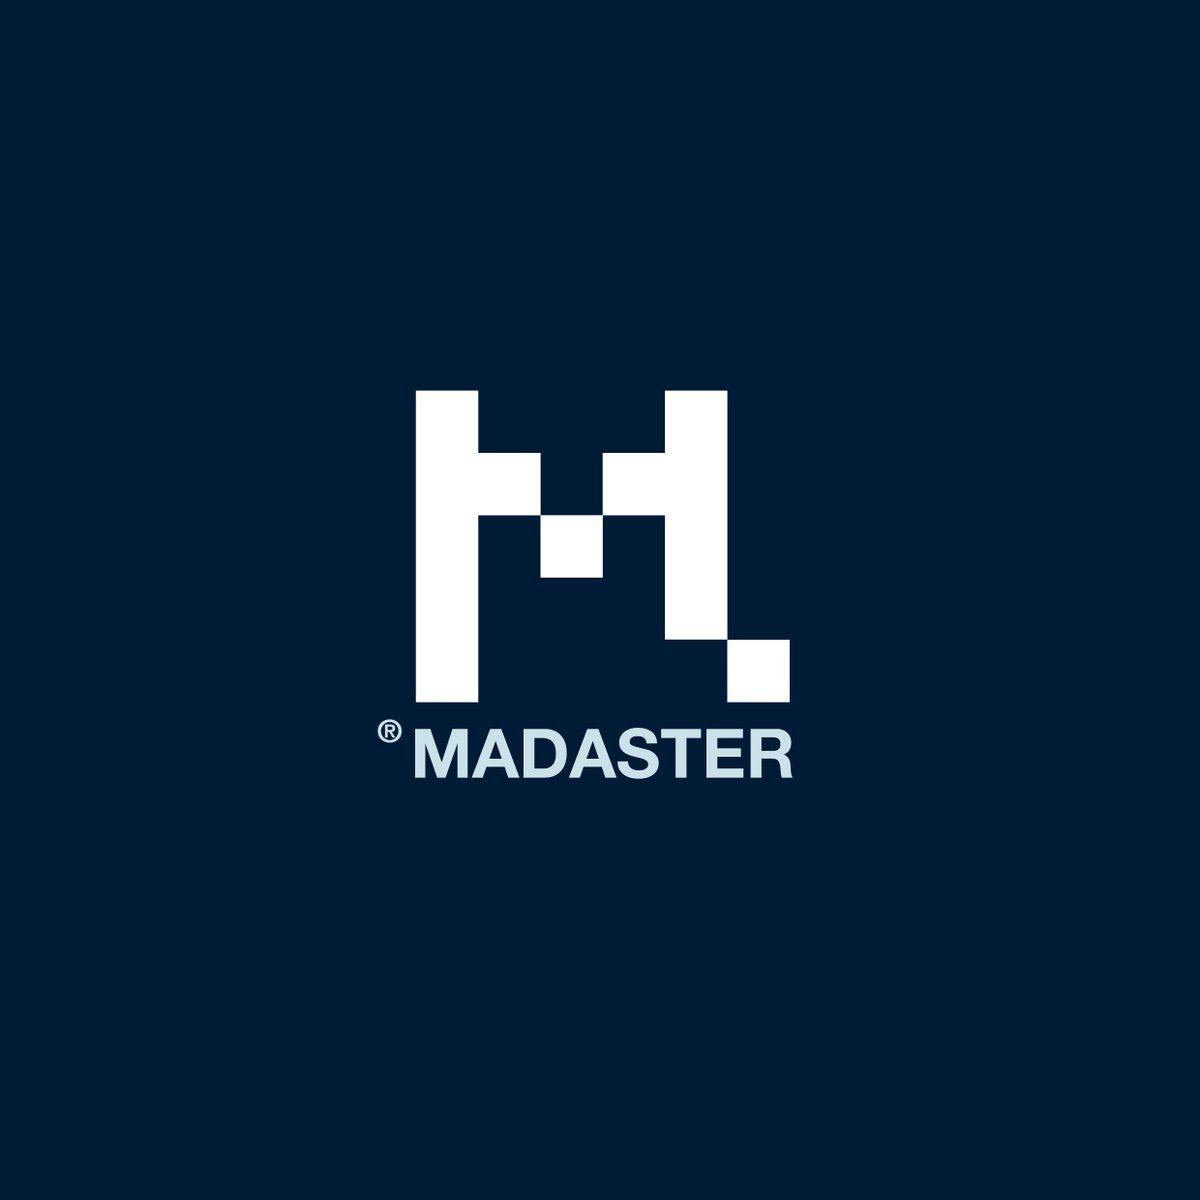 Eliminate Logo - Madaster Twitterissä: Want to help us eliminate waste worldwide